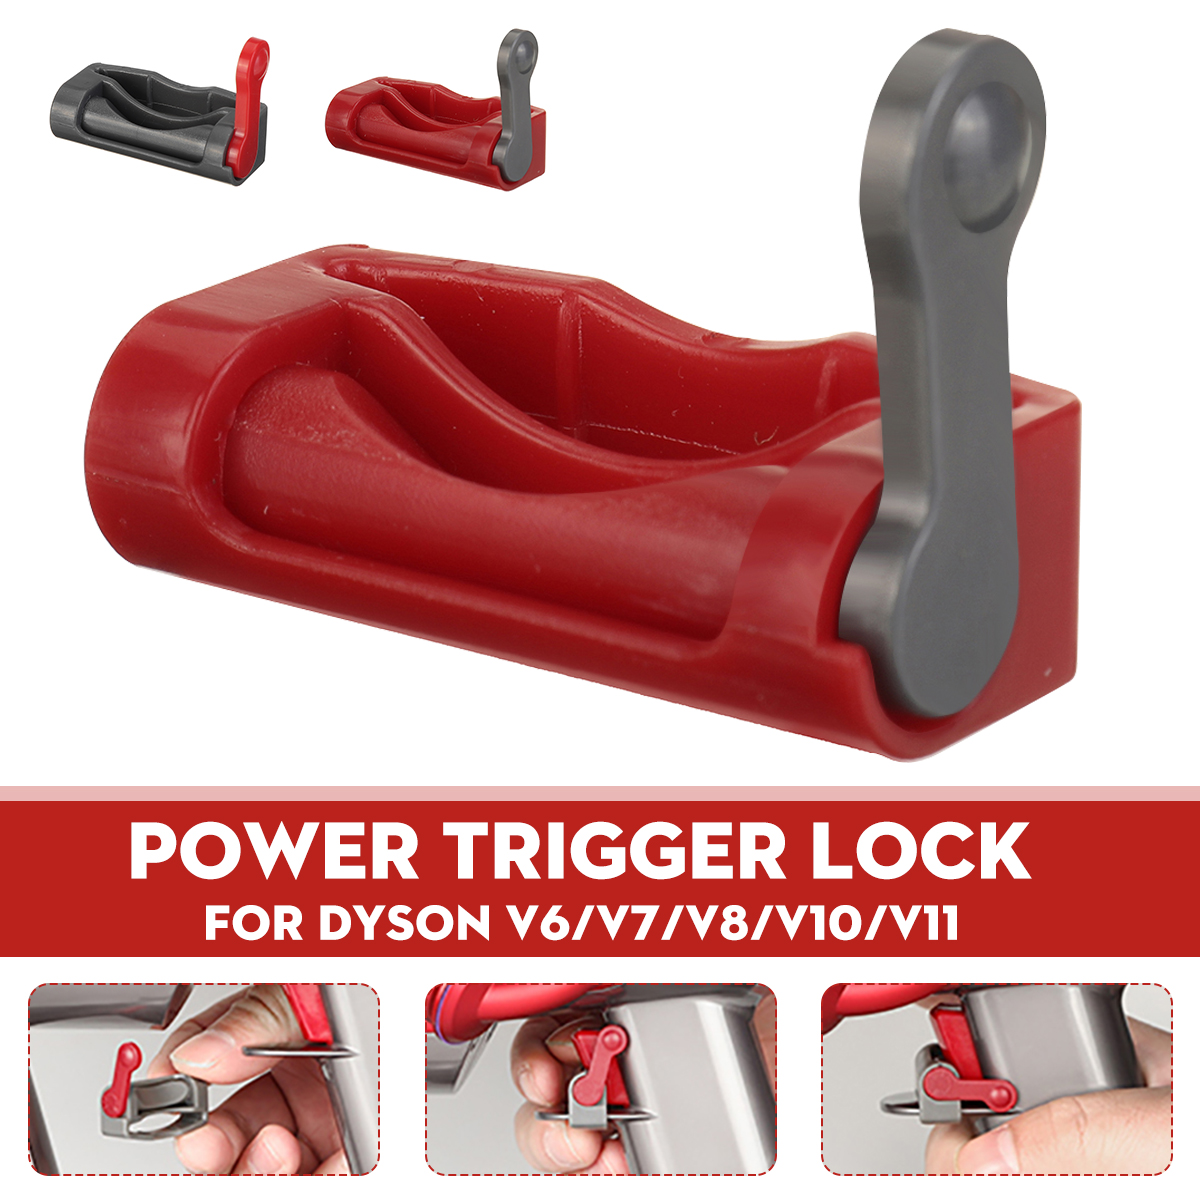 Find Trigger Lock Replacement for Dyson V6 V7 V8 V10 V11 Vacuum Cleaner Not original for Sale on Gipsybee.com with cryptocurrencies